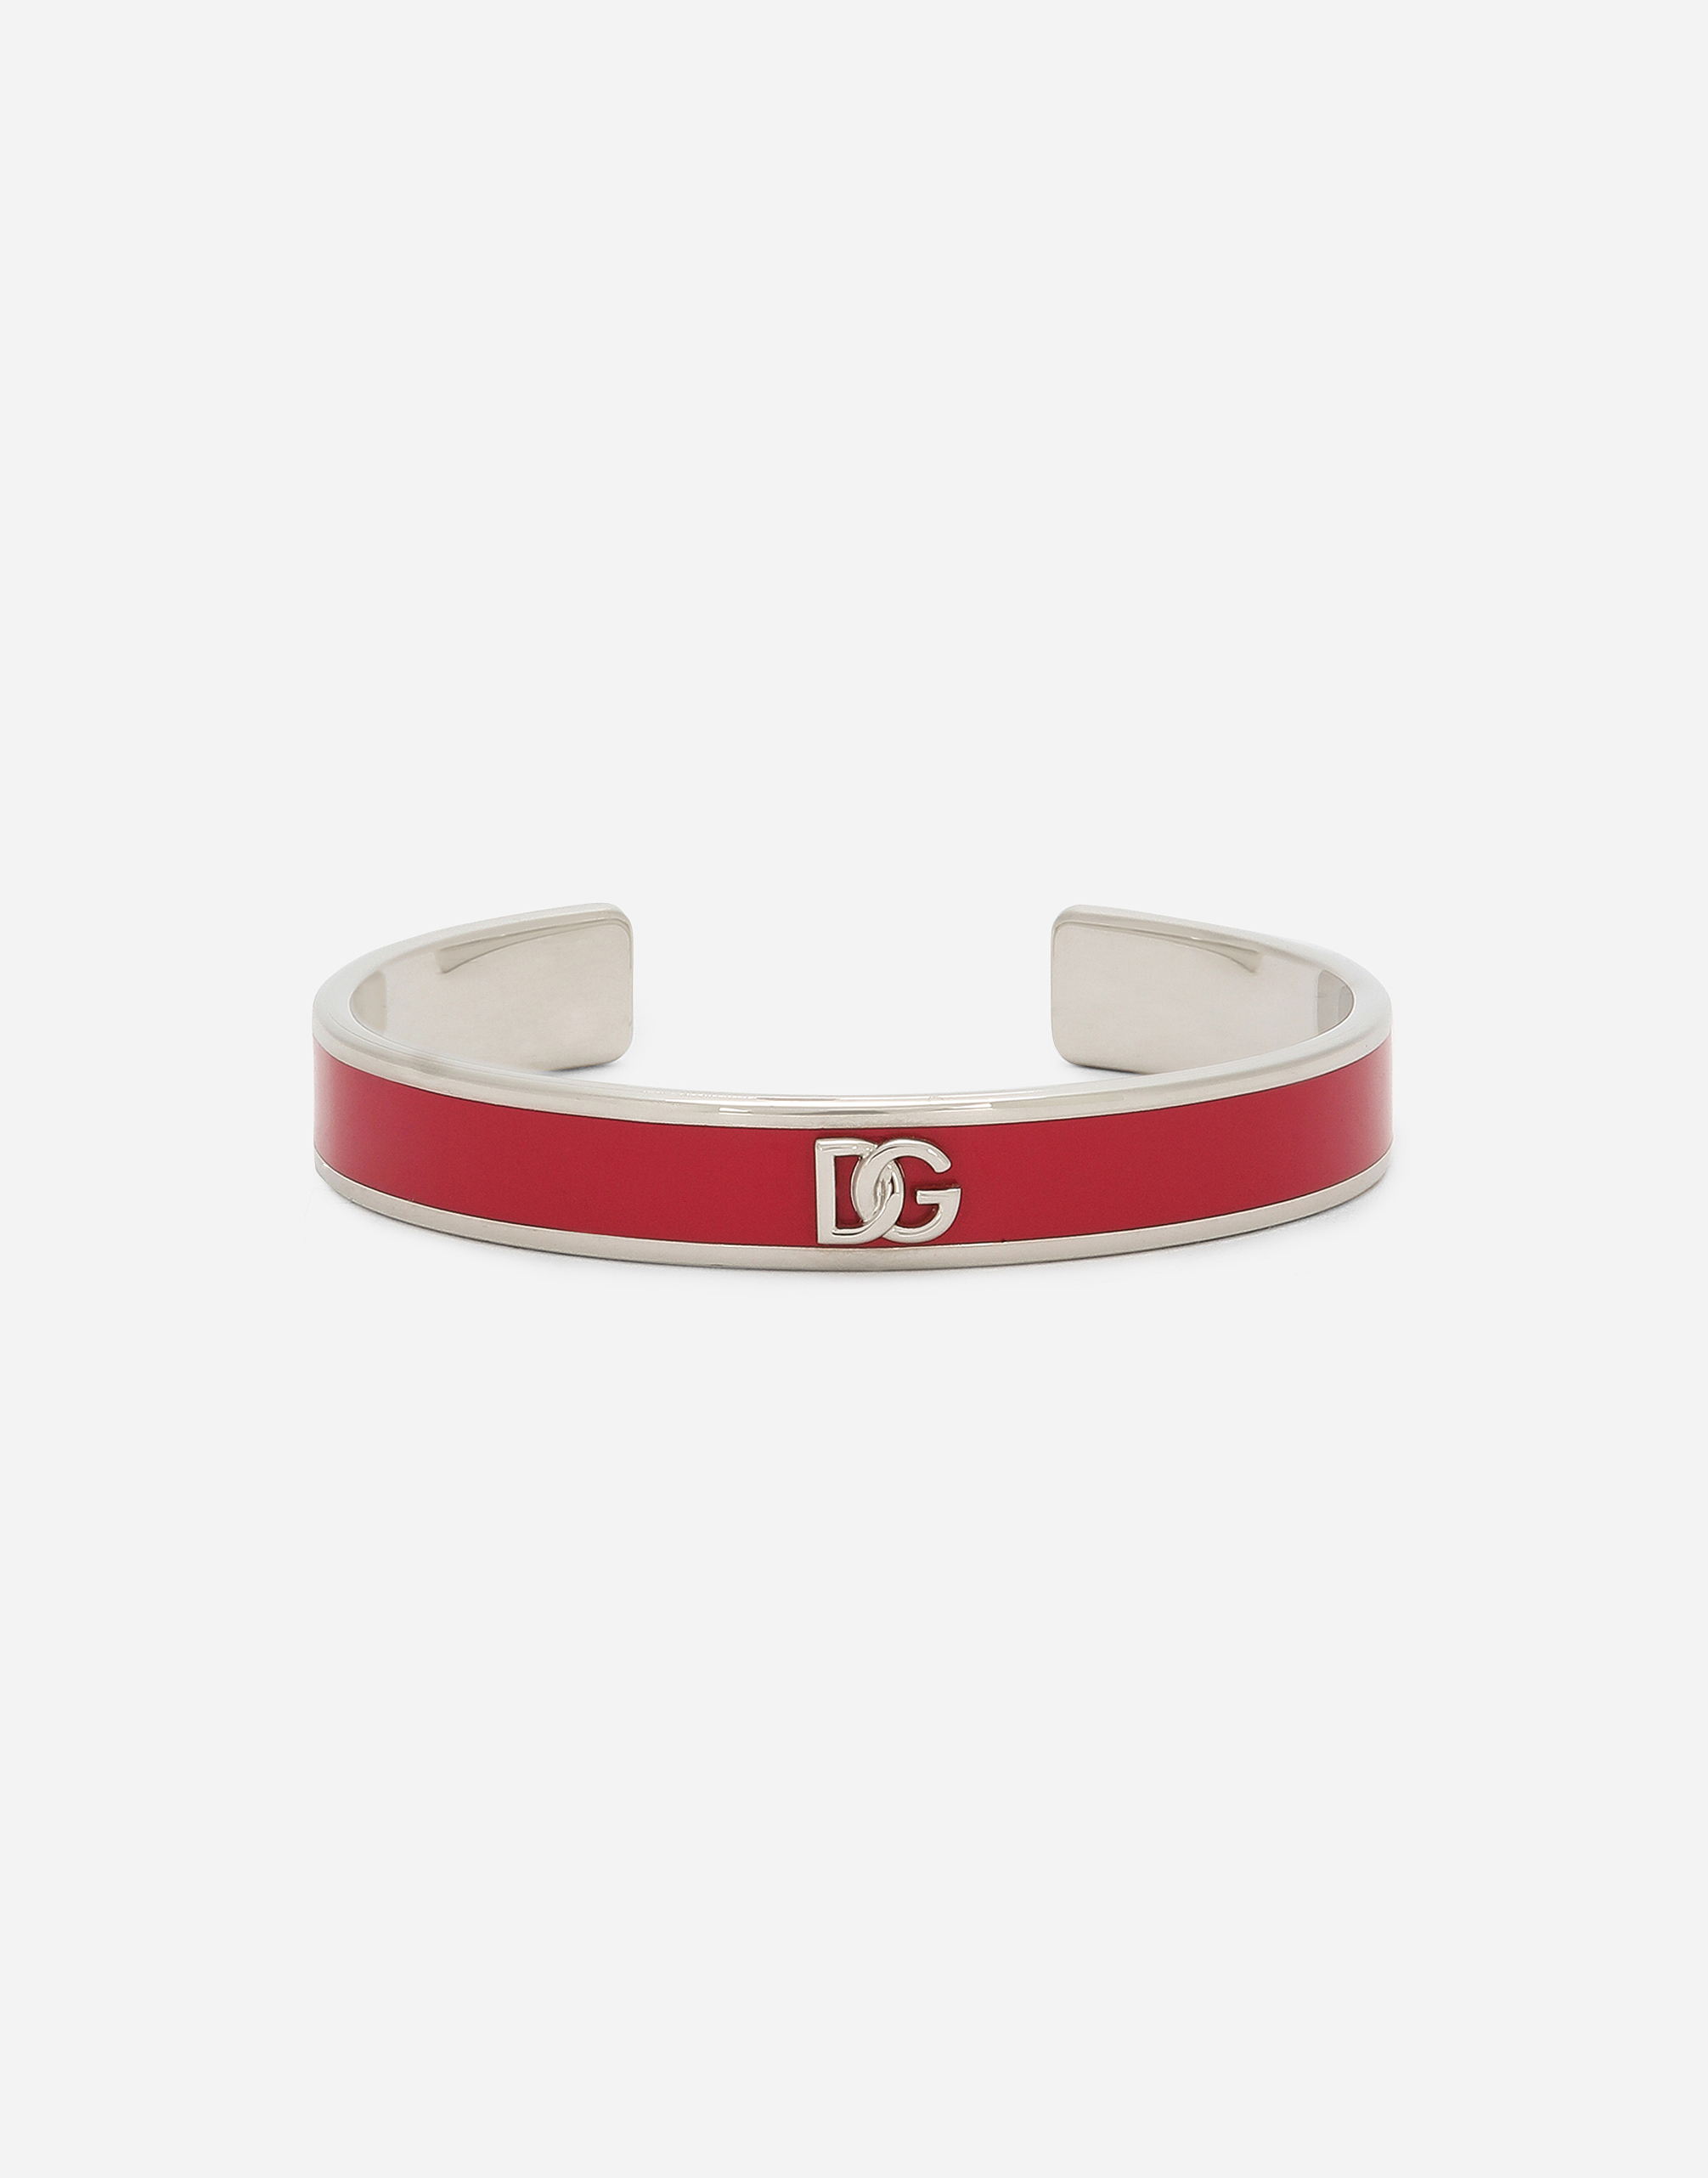 Rigid enameled bracelet with DG logo in Fuchsia